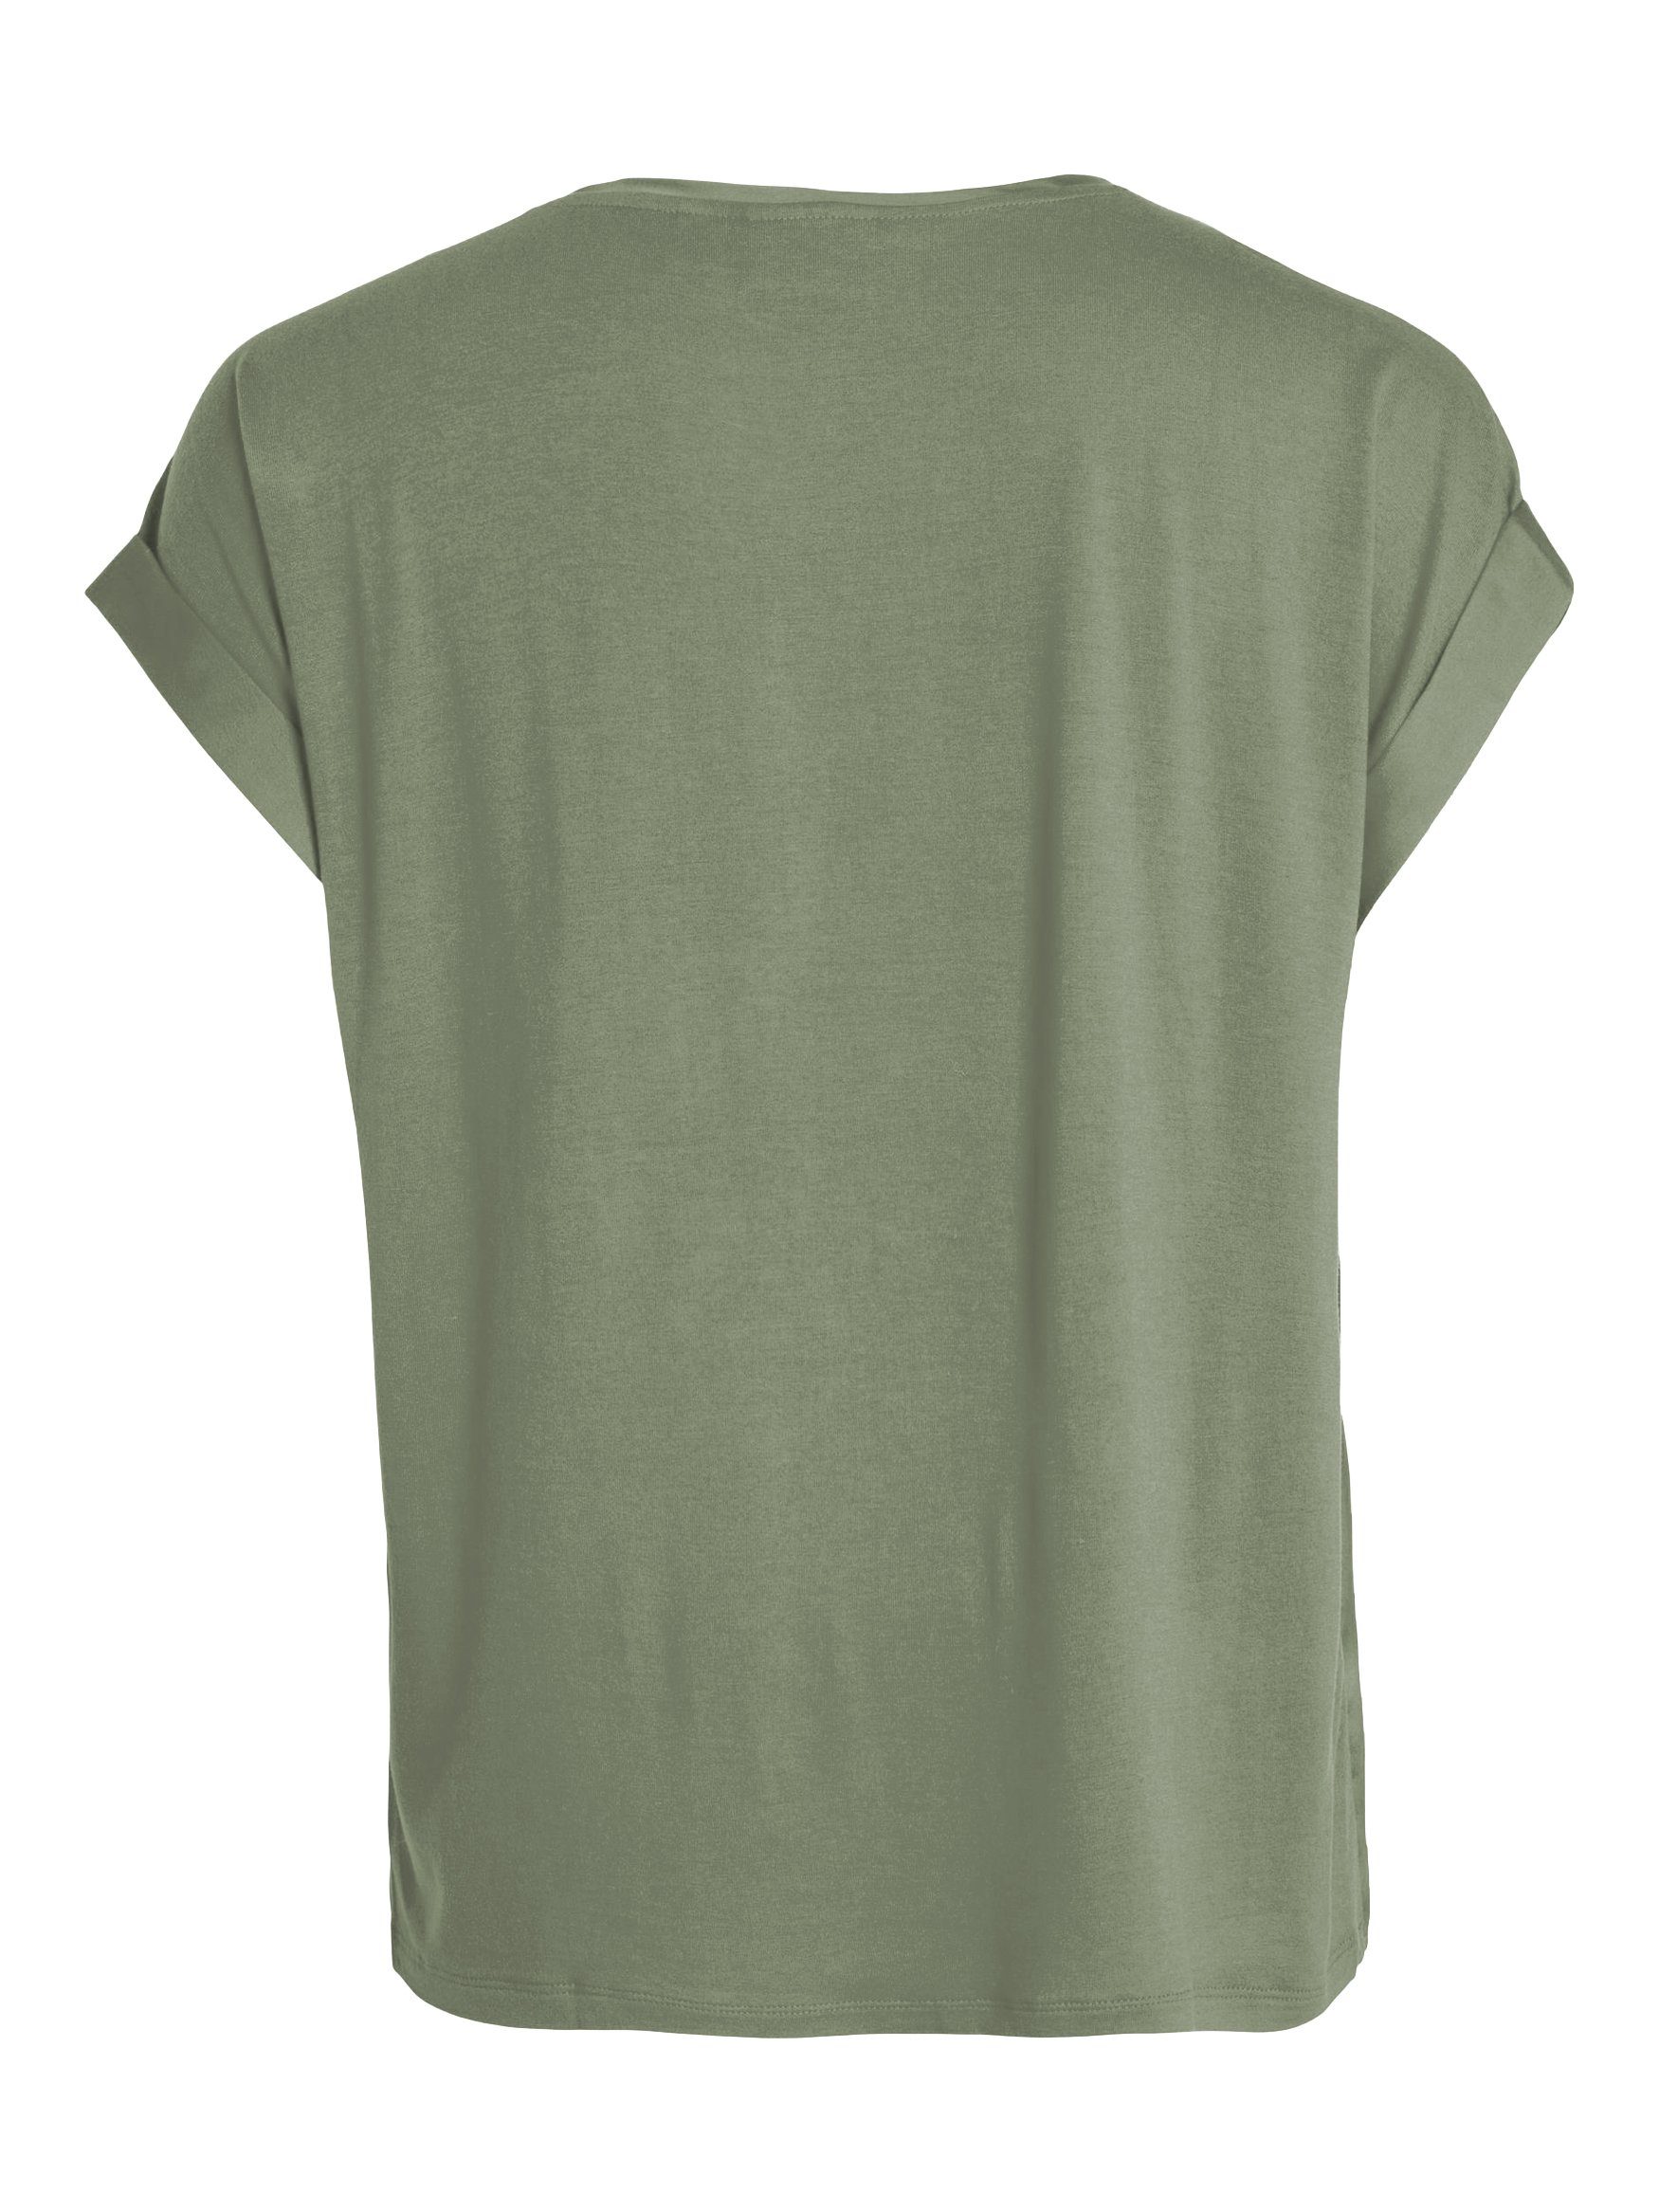 T-Shirt in Glänzend 4599 Satain Rosa-2 Top T-Shirt Blusen VIELLETTE Vila Basic Kurzarm